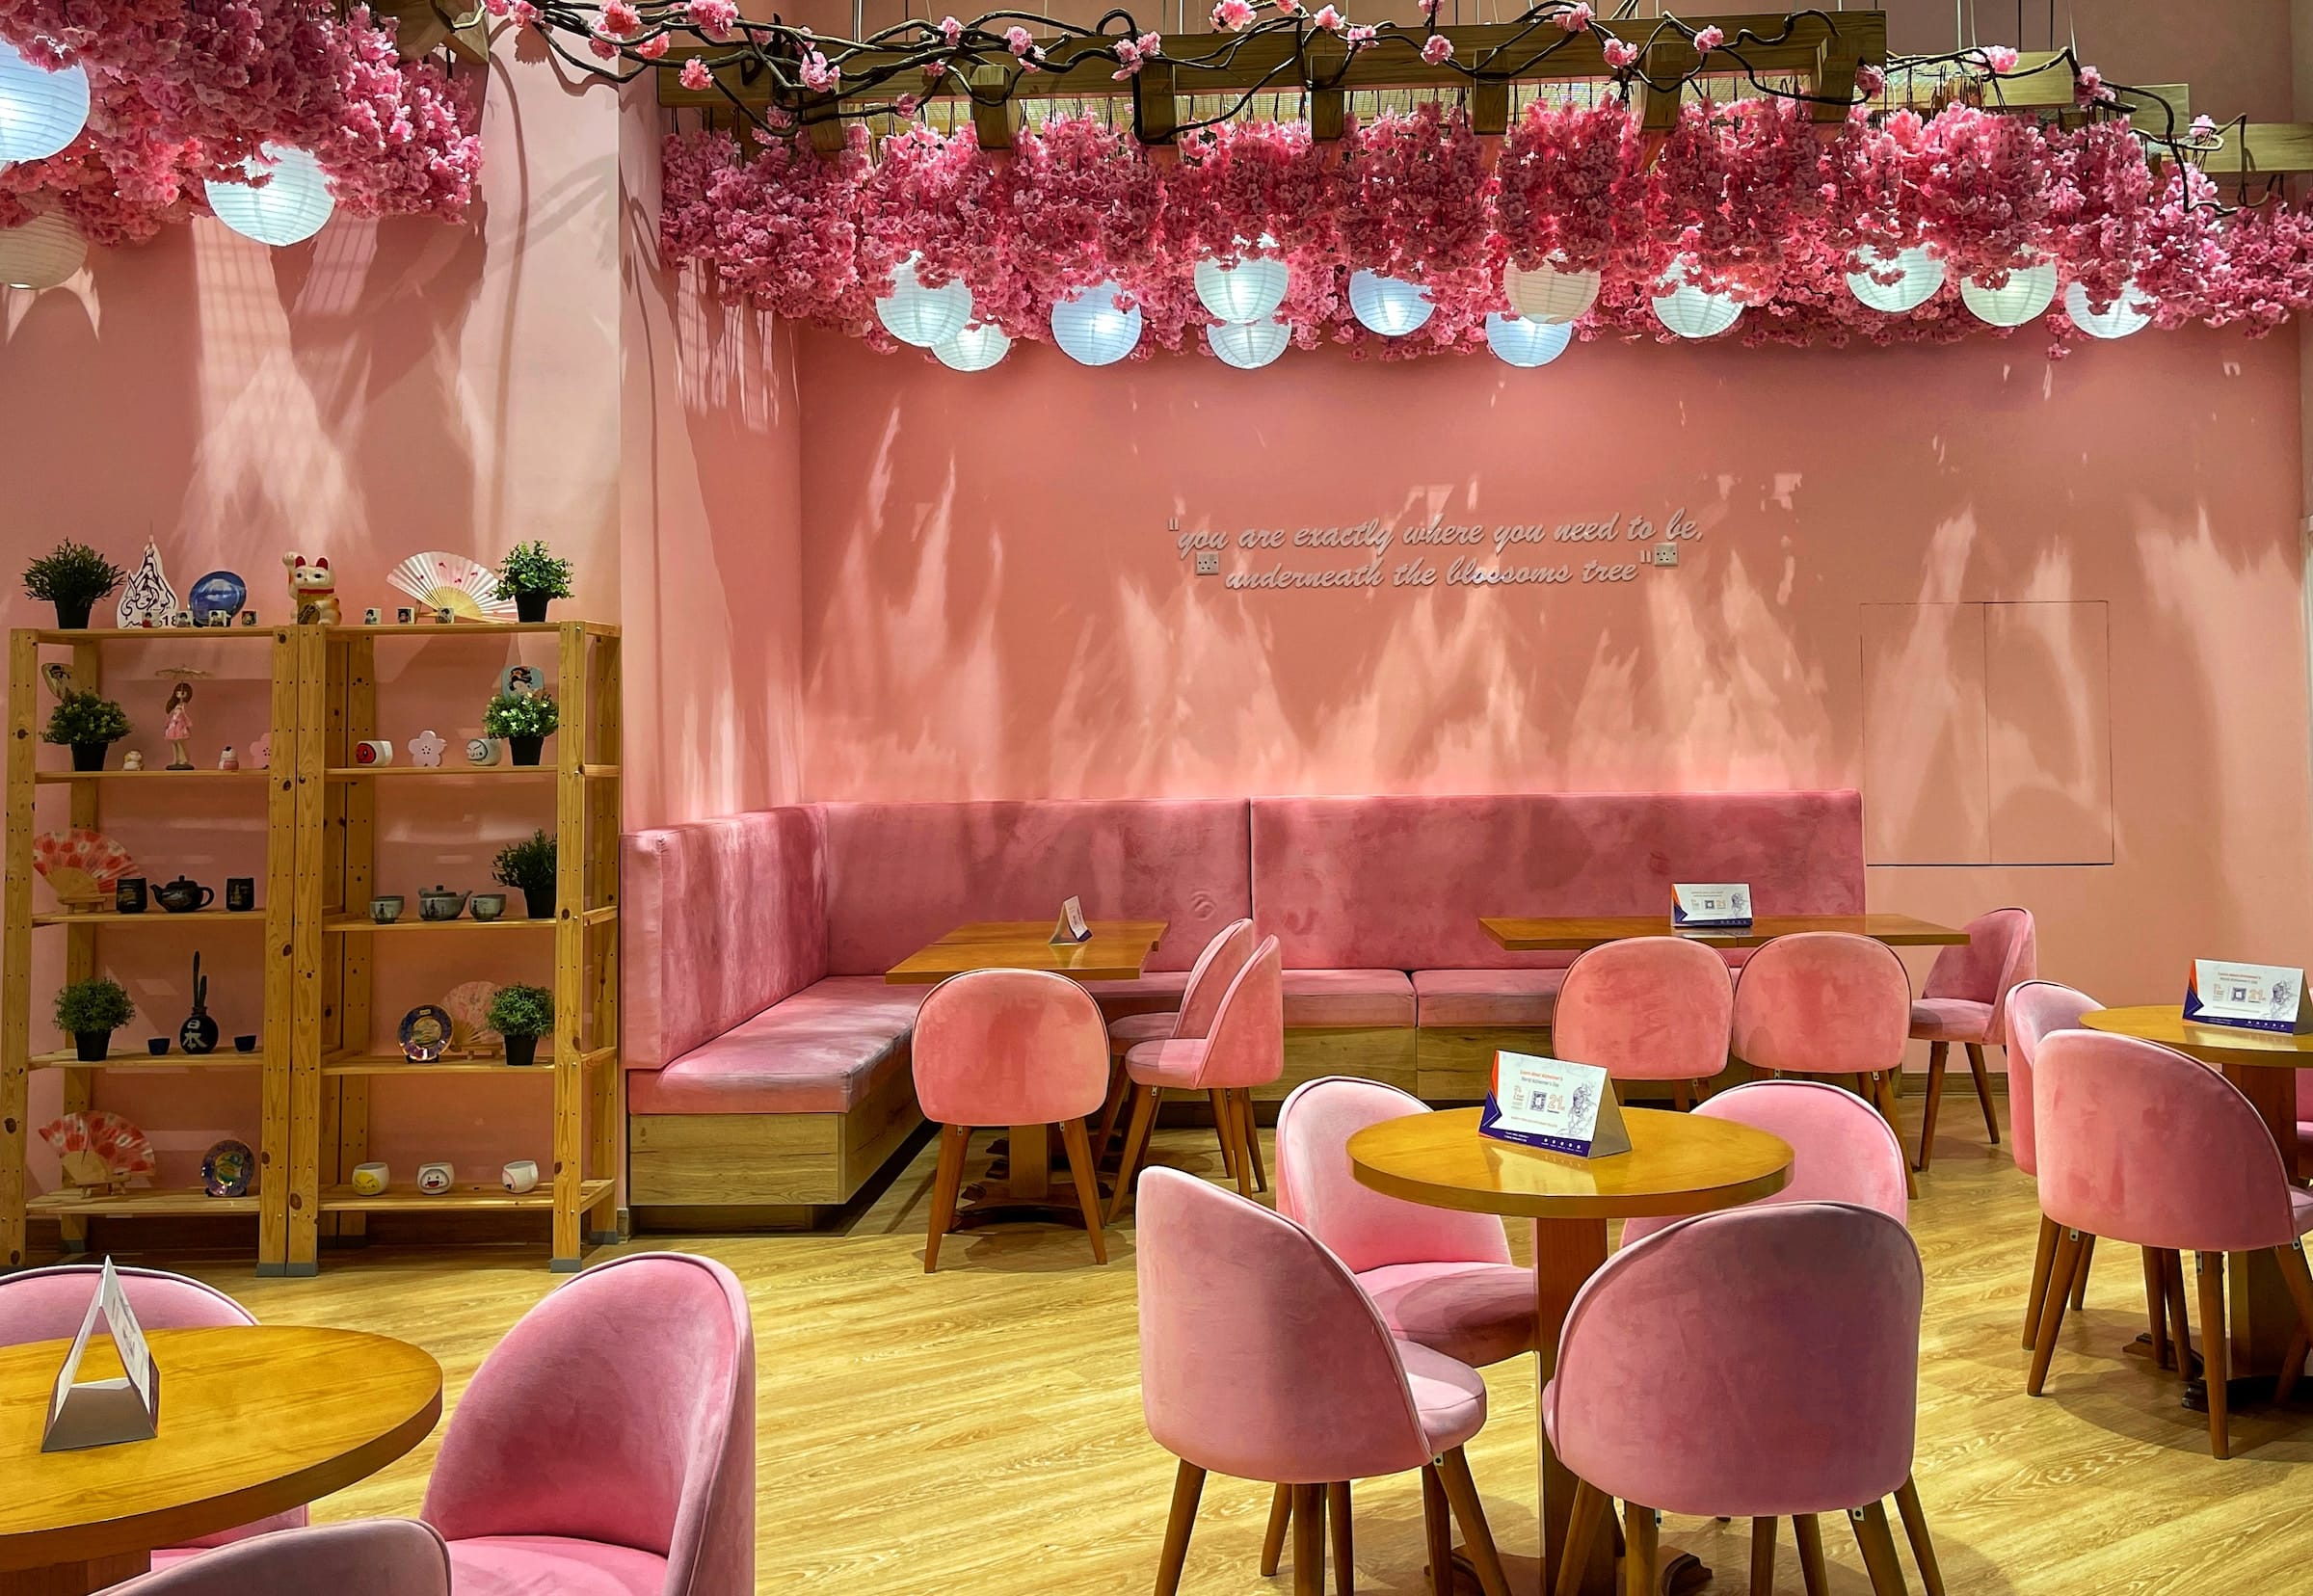 Salle de restaurant rose et fleurie